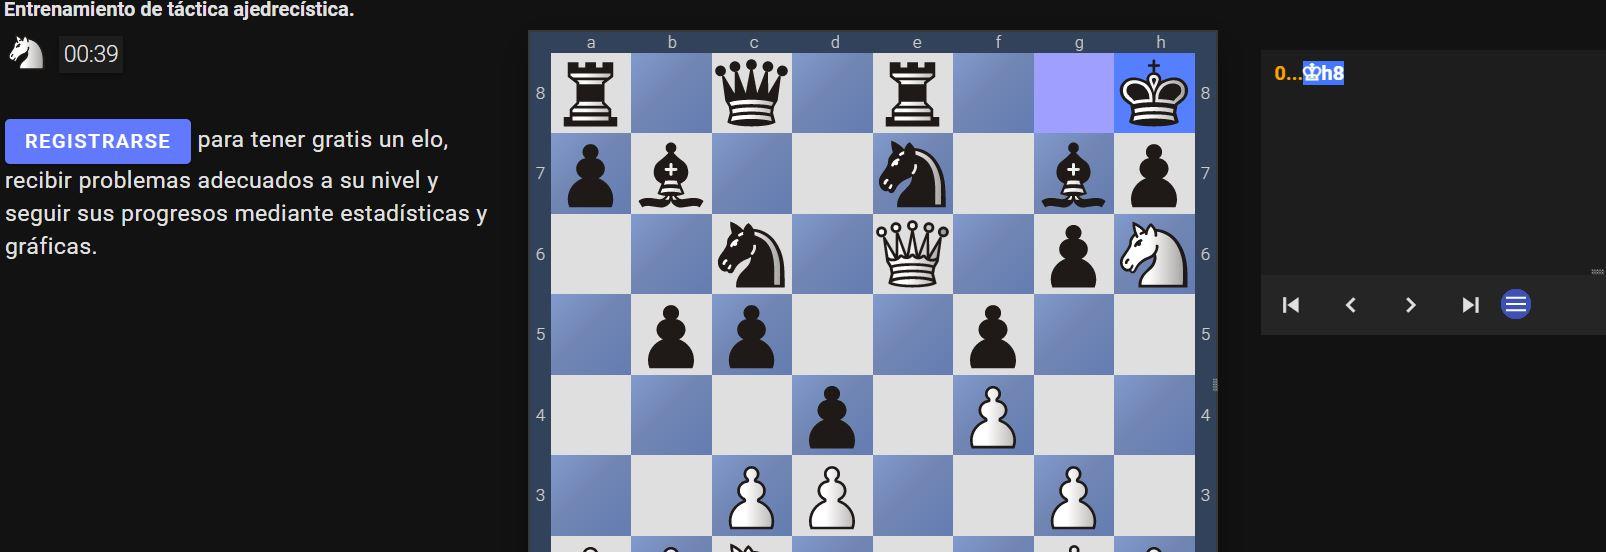 Entrenamiento ajedrez